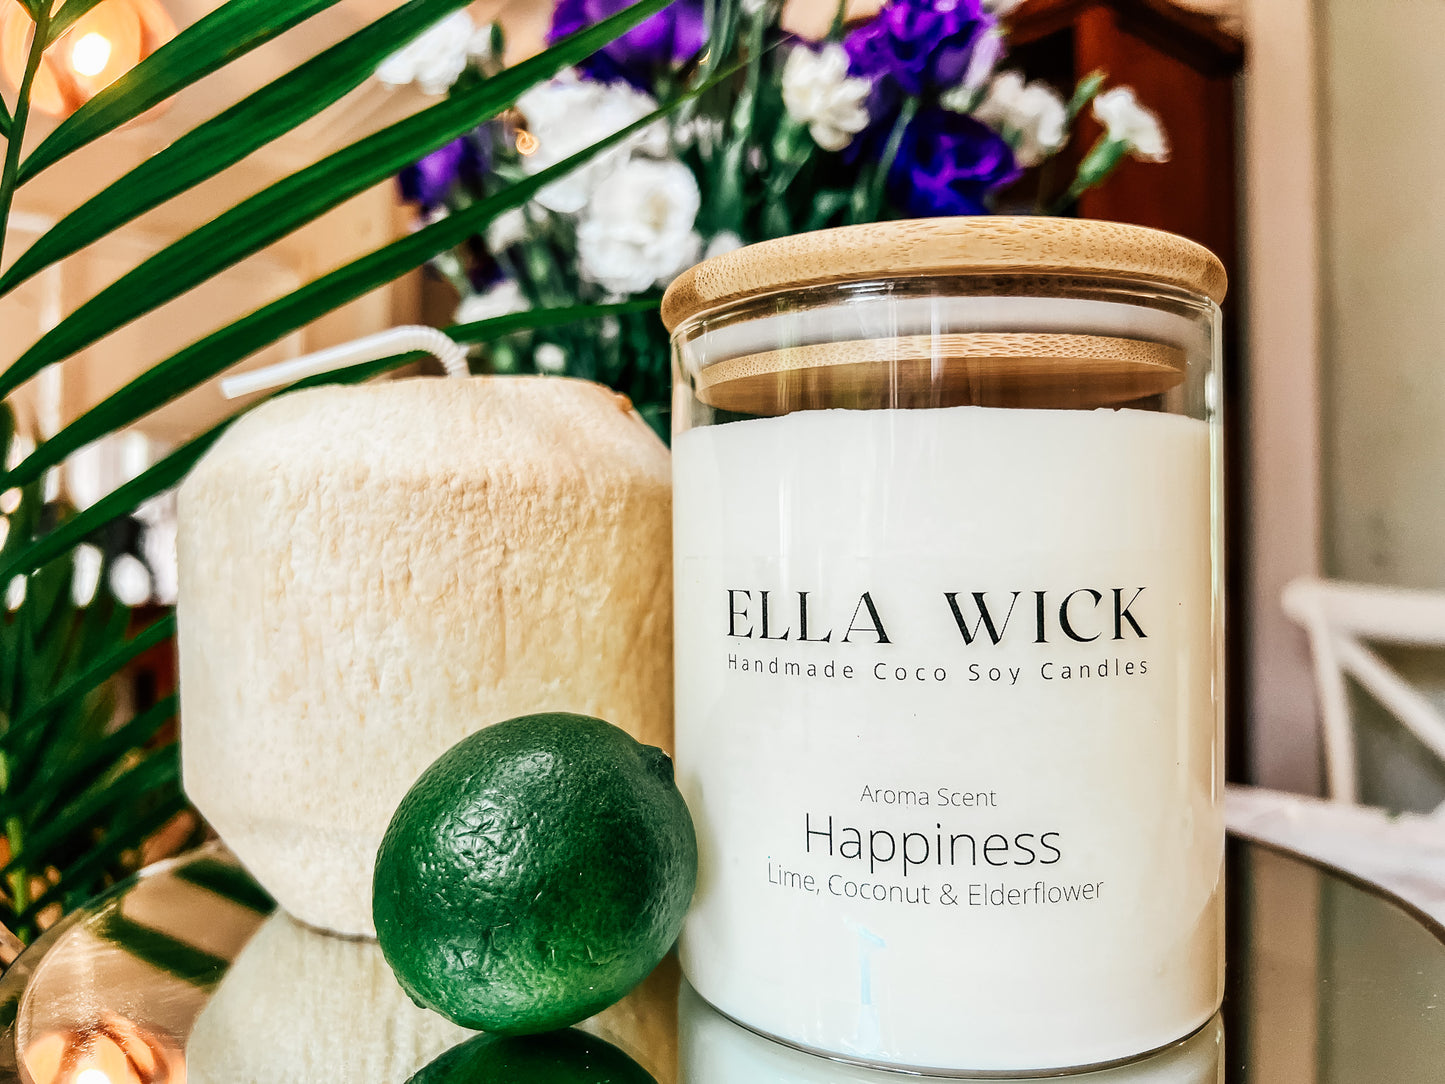 Happiness - Lime, Coconut & Elderflower